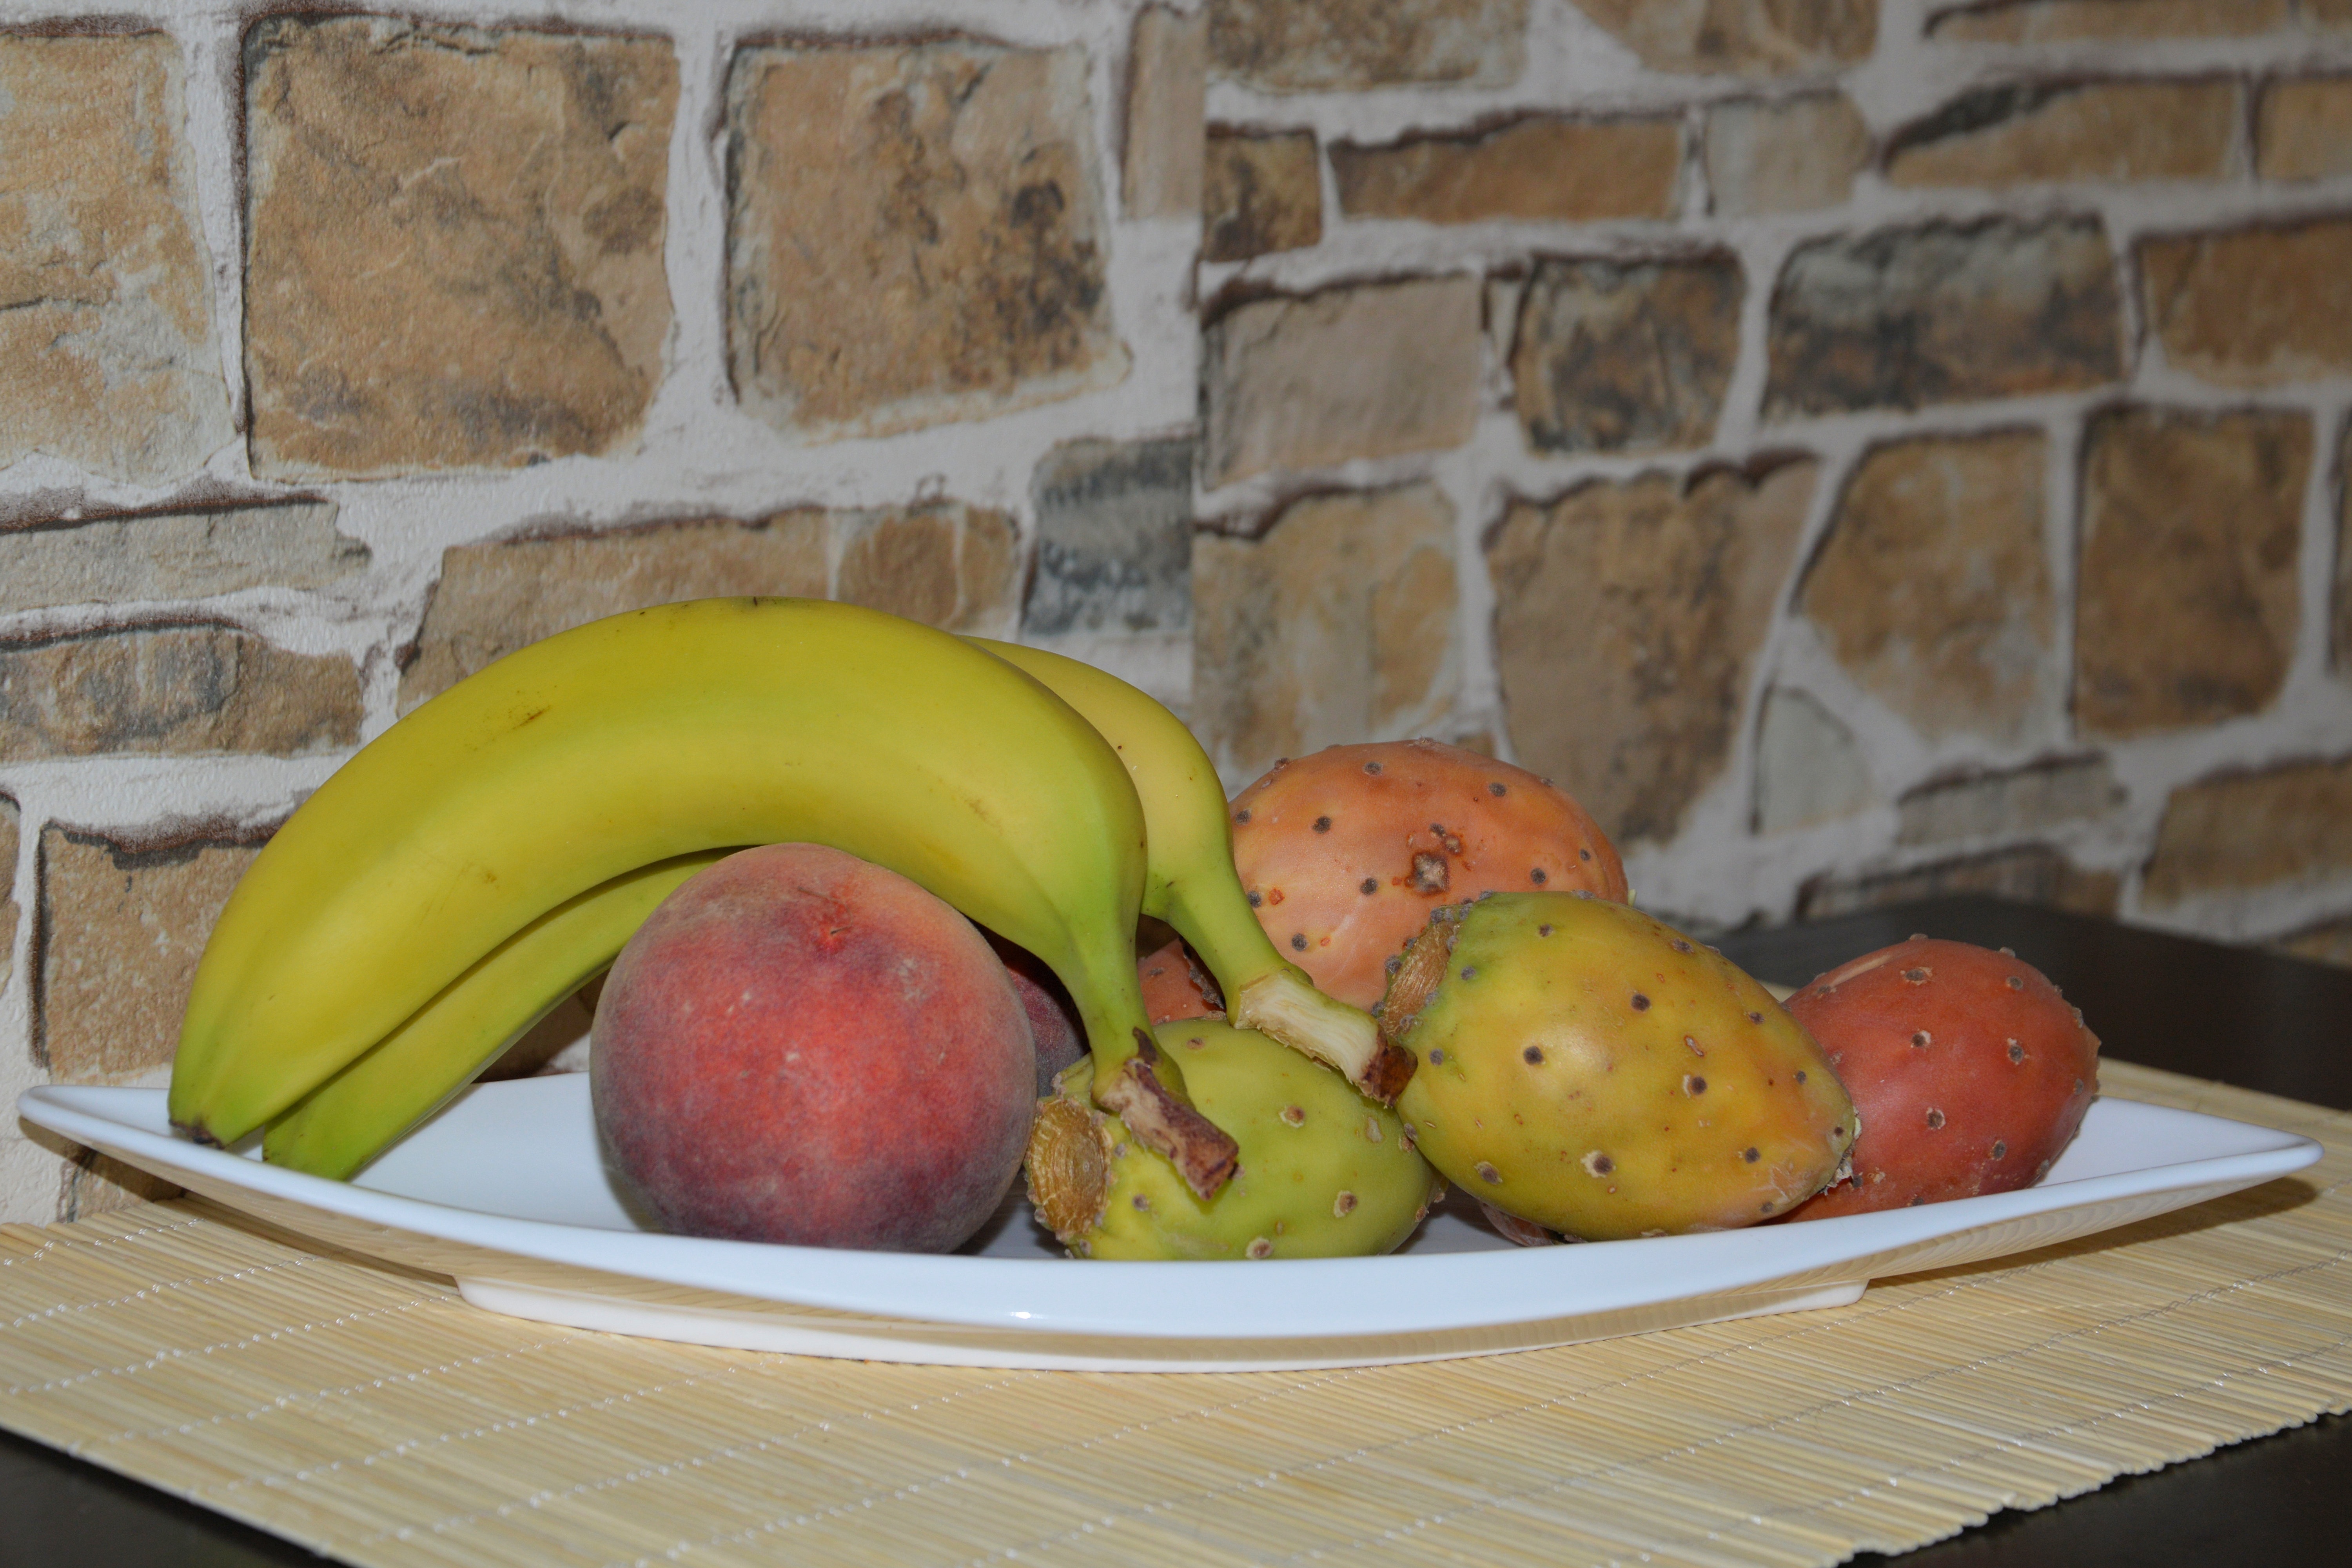 bananas and round fruits